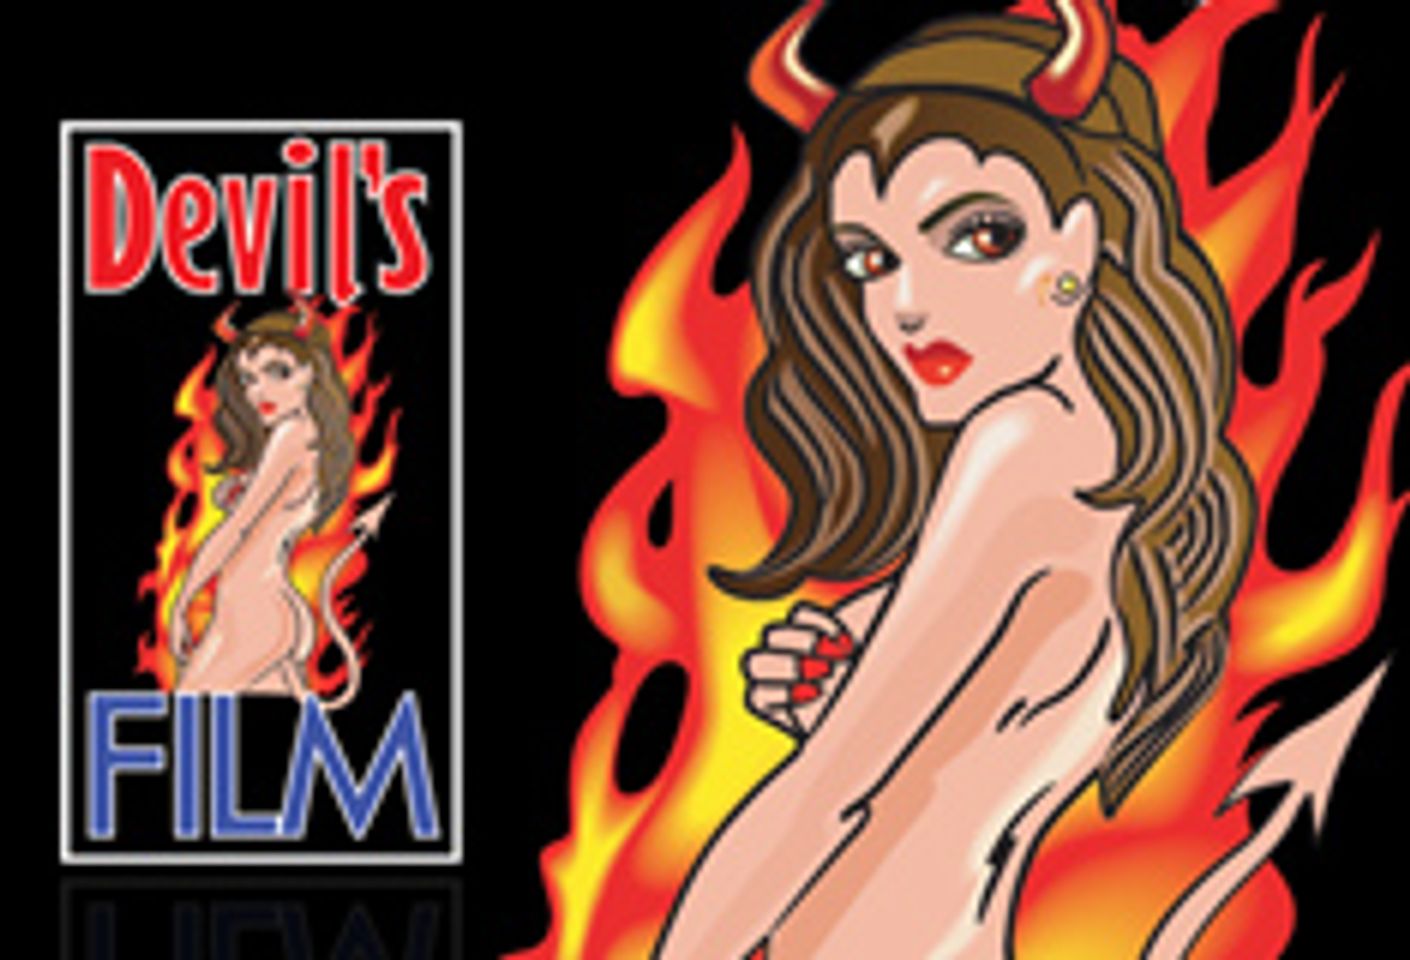 Devil's Film Officially Announces Hiring of Eric Gutterman